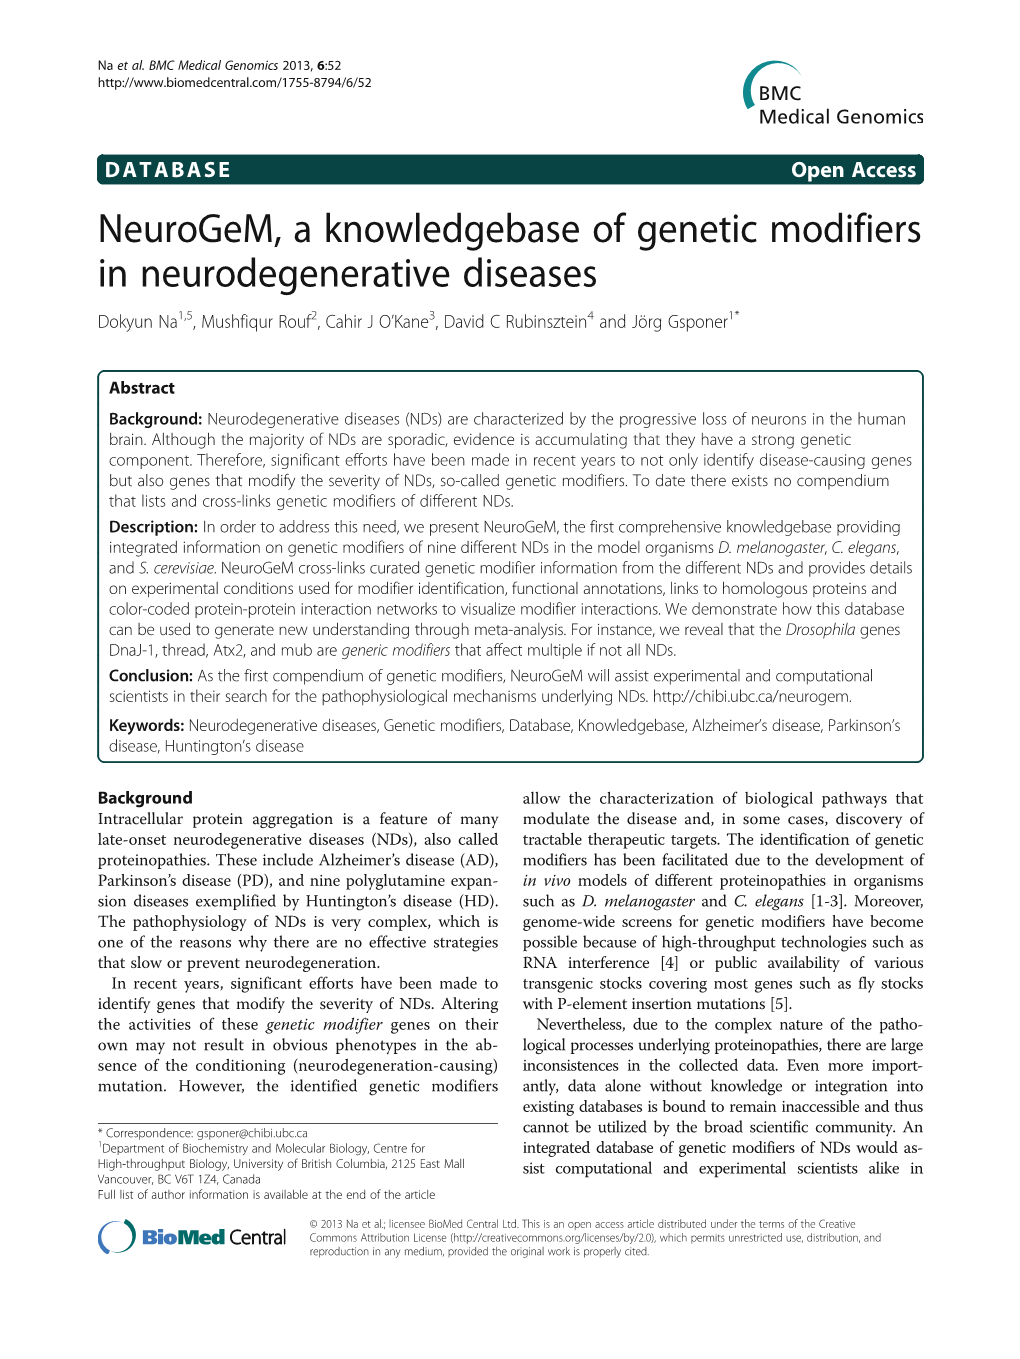 Neurogem, a Knowledgebase of Genetic Modifiers in Neurodegenerative Diseases Dokyun Na1,5, Mushfiqur Rouf2, Cahir J O’Kane3, David C Rubinsztein4 and Jörg Gsponer1*